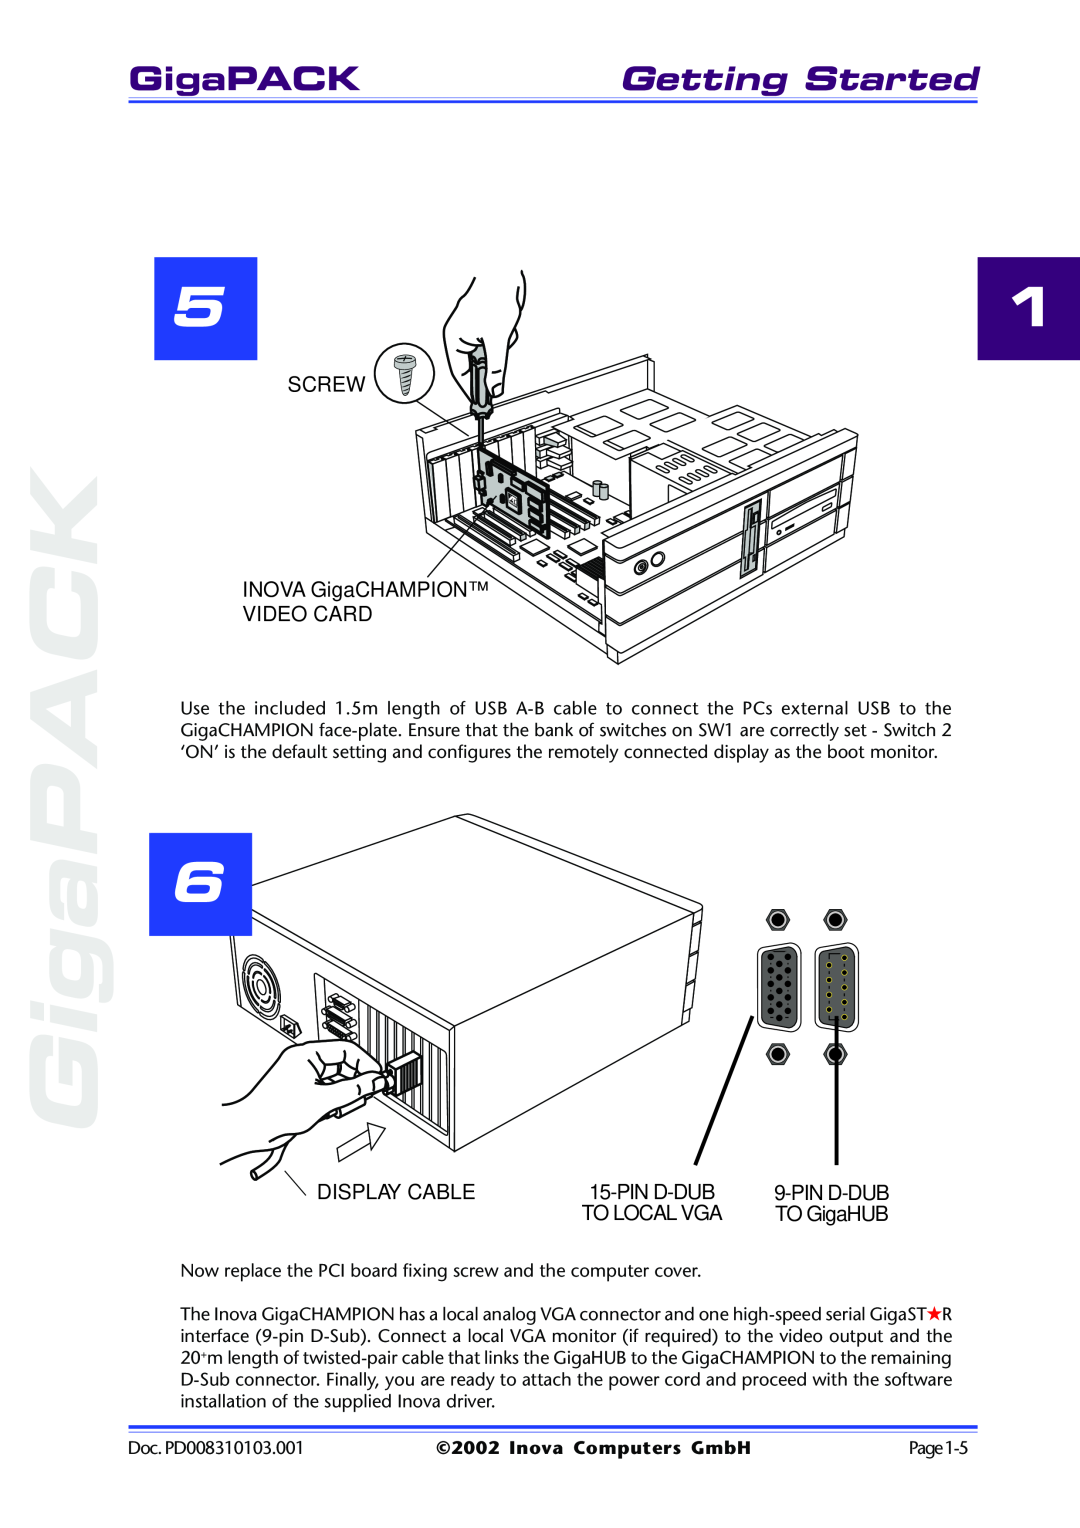 Inova PD008310103.001 AB GigaPACK, Getting Started, Screw, INOVA GigaCHAMPION VIDEO CARD, Display Cable, Pin D-Dub 